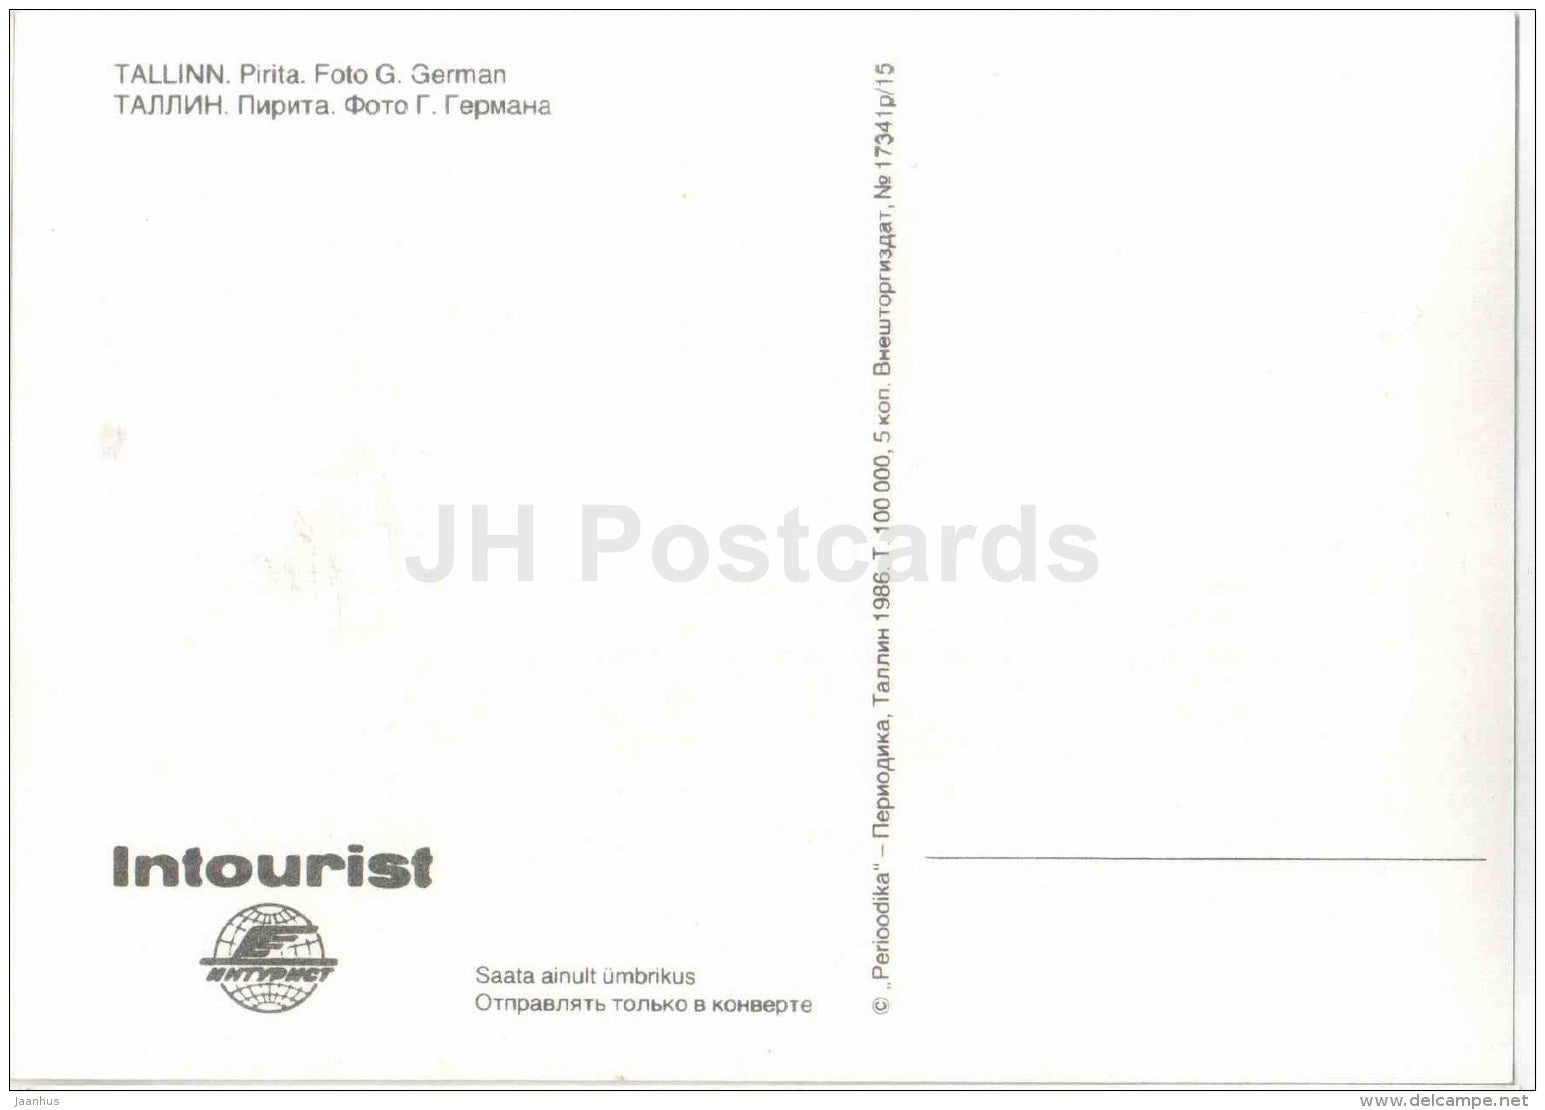 Pirita Convent - Pirita Olympic Sailing Centre - beach - Tallinn - Intourist - 1986 - Estonia USSR - unused - JH Postcards